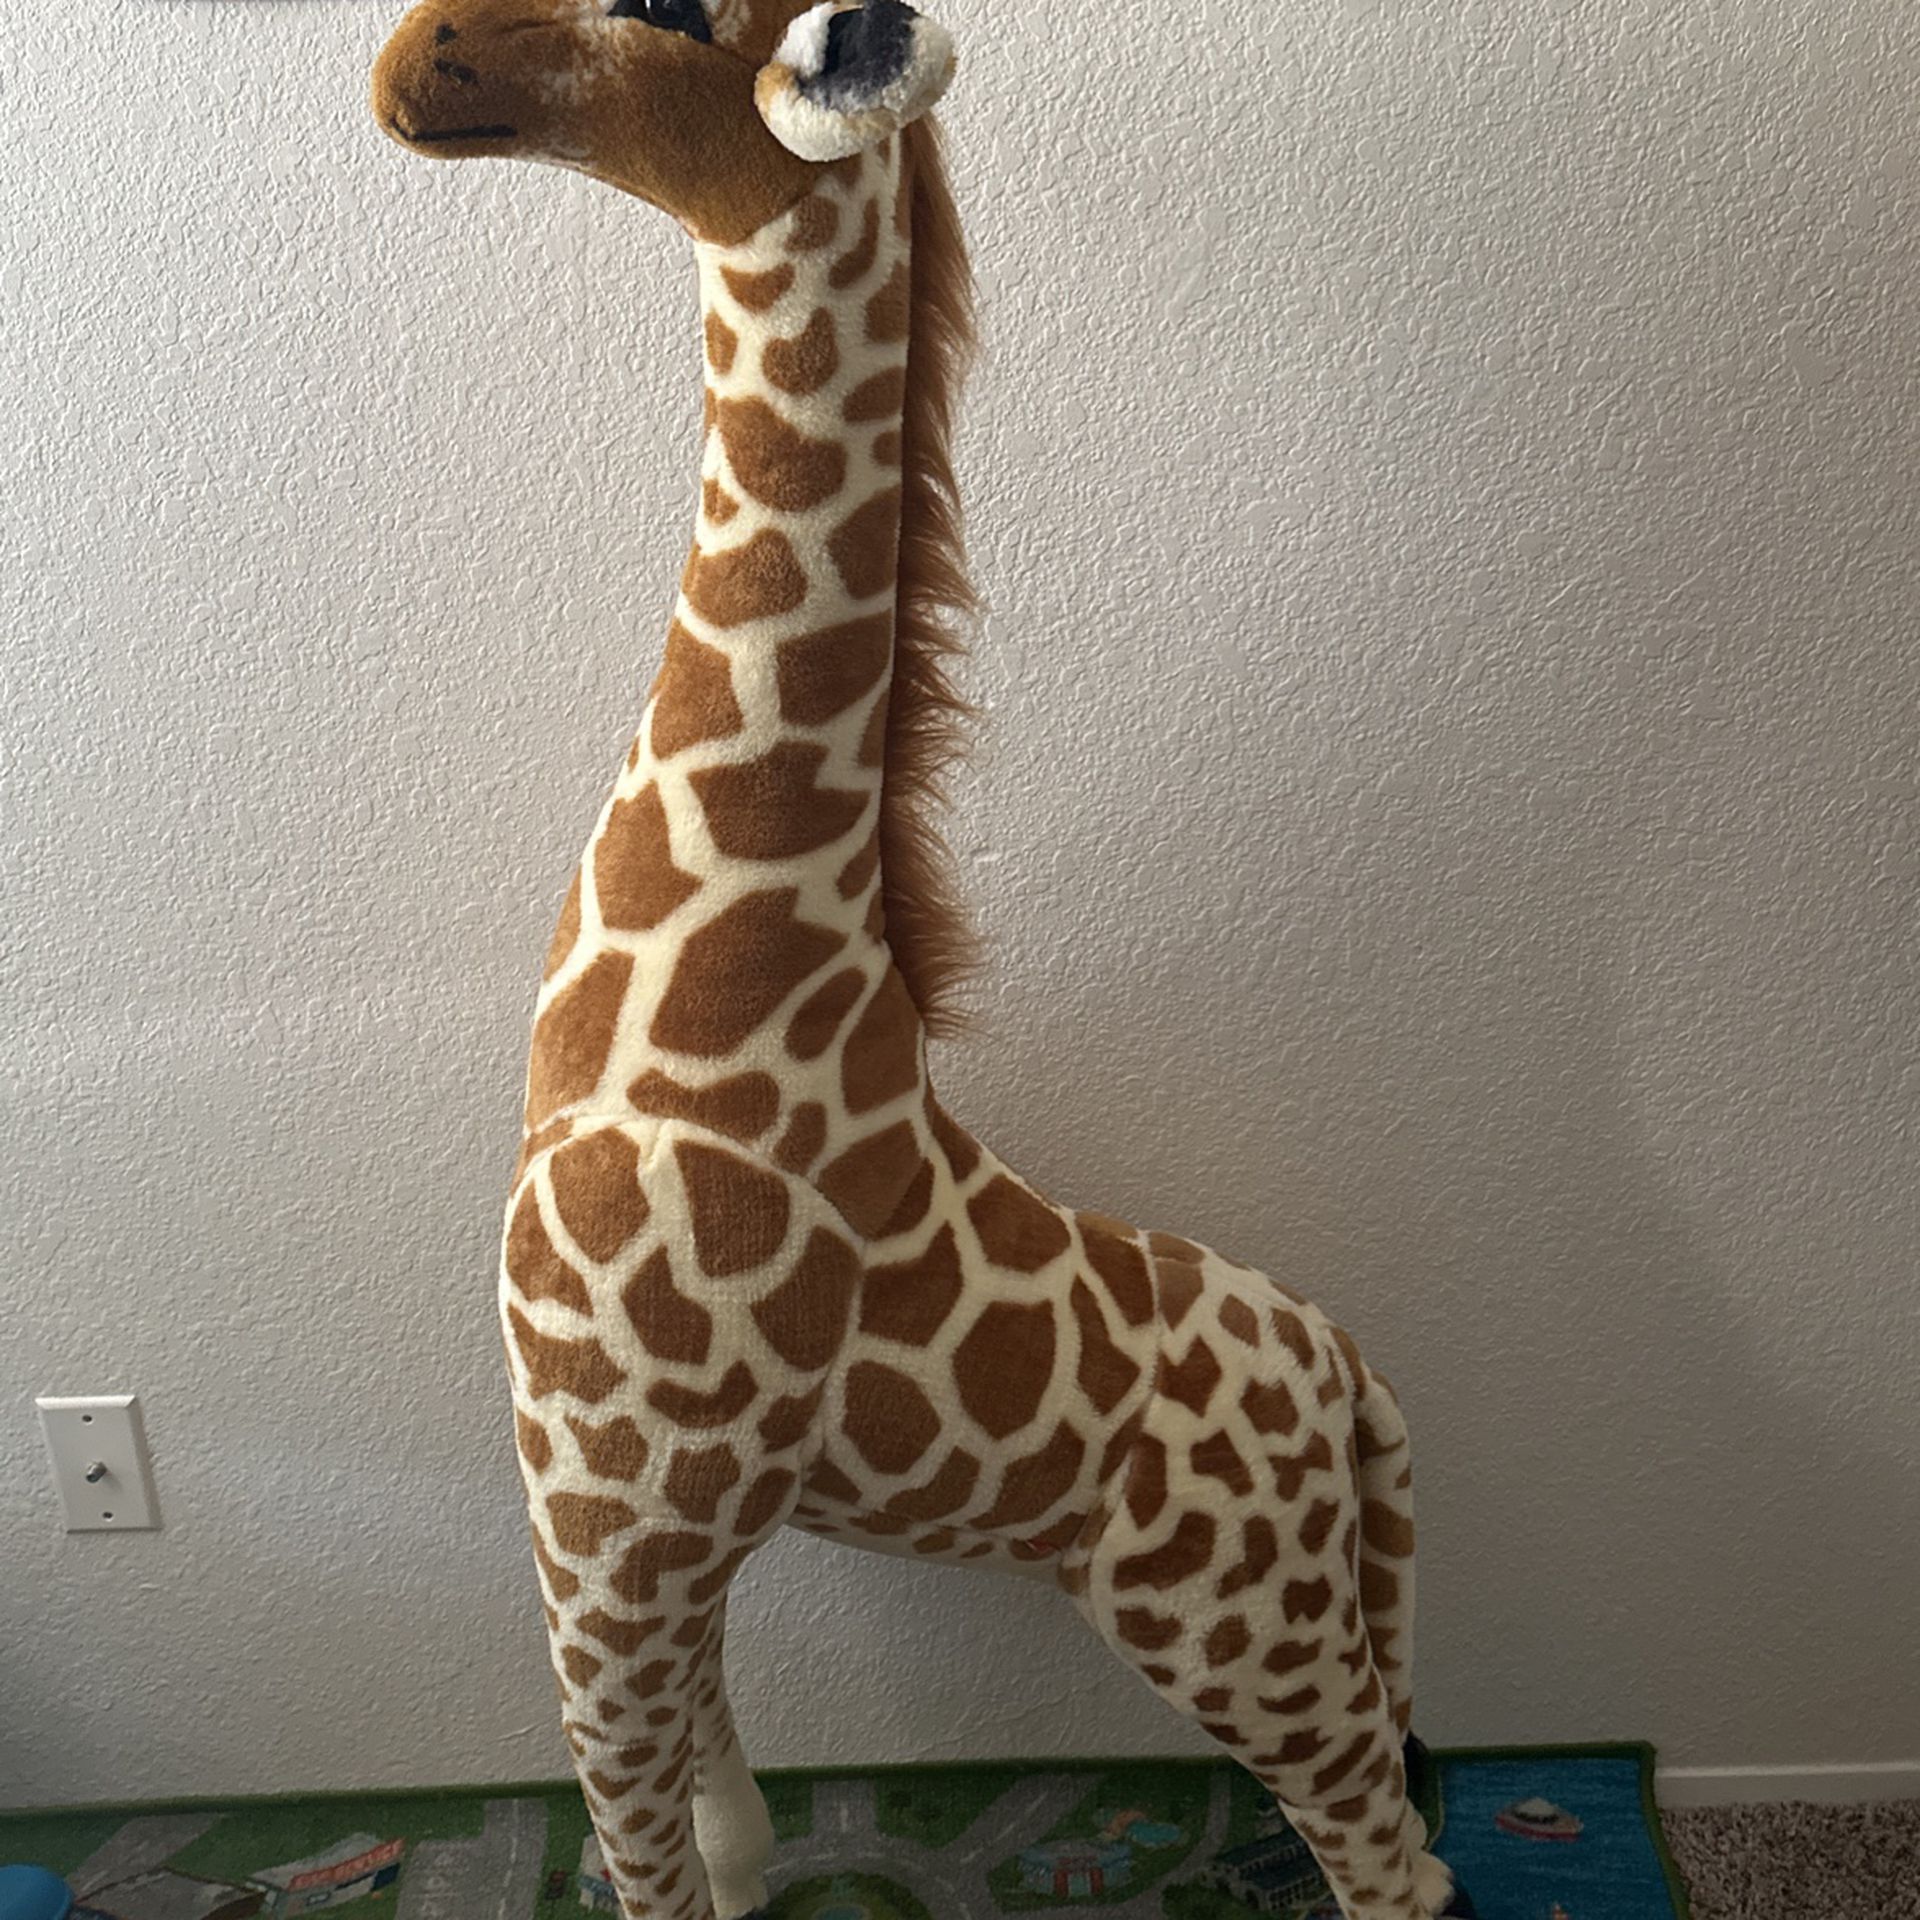 Giant Stuffed Giraffe 